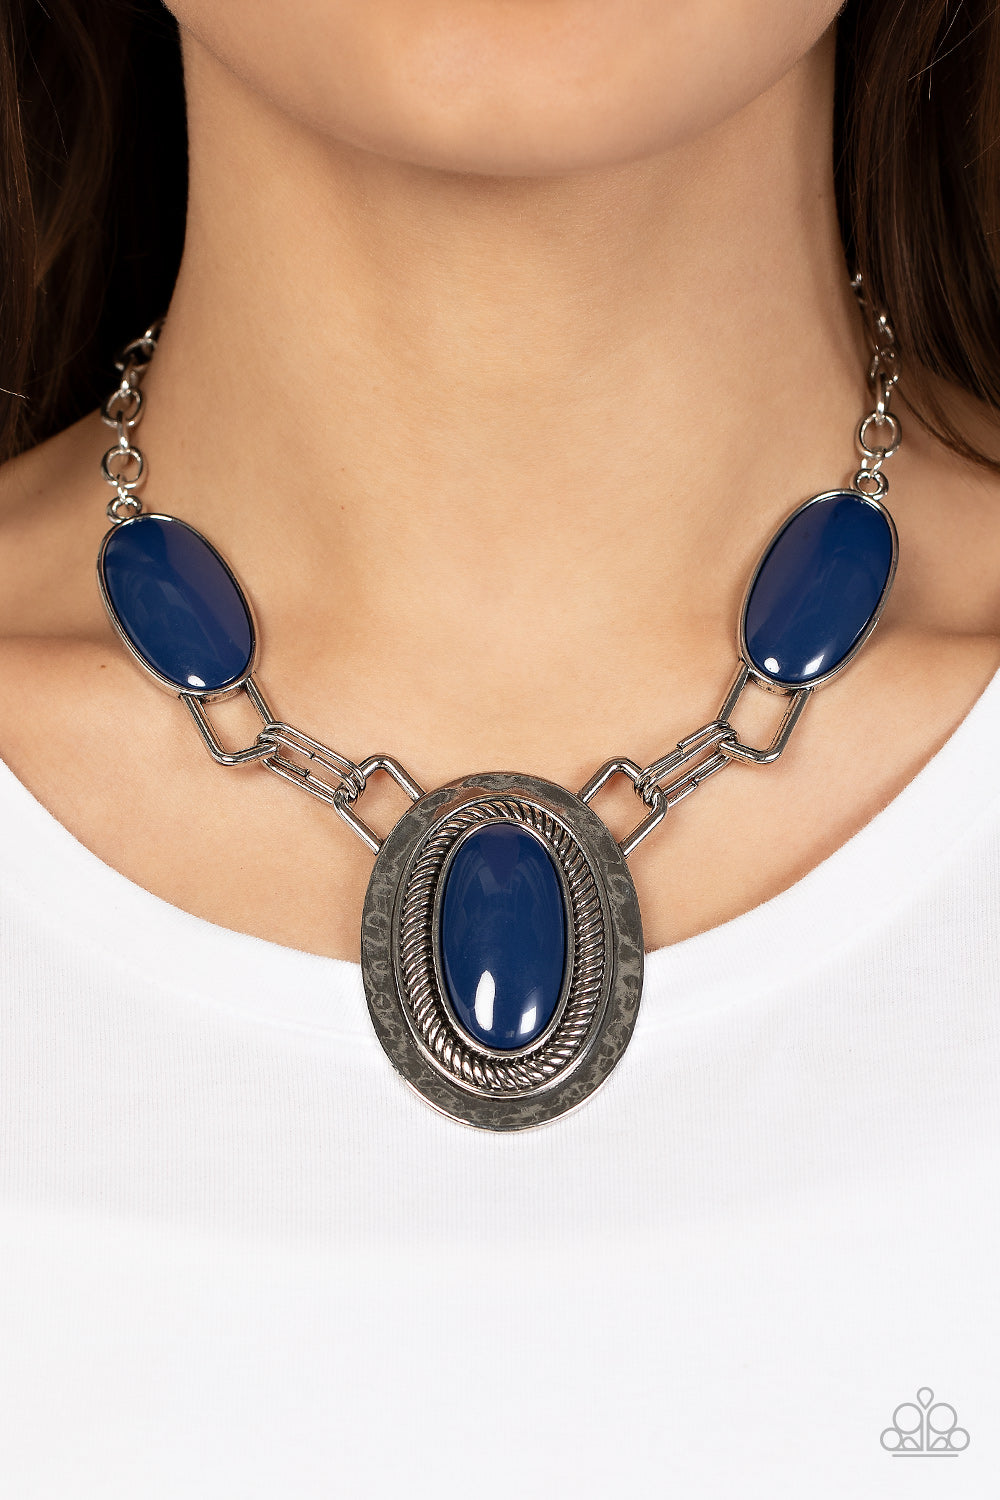 Count to TENACIOUS - Blue Necklace Set - Princess Glam Shop